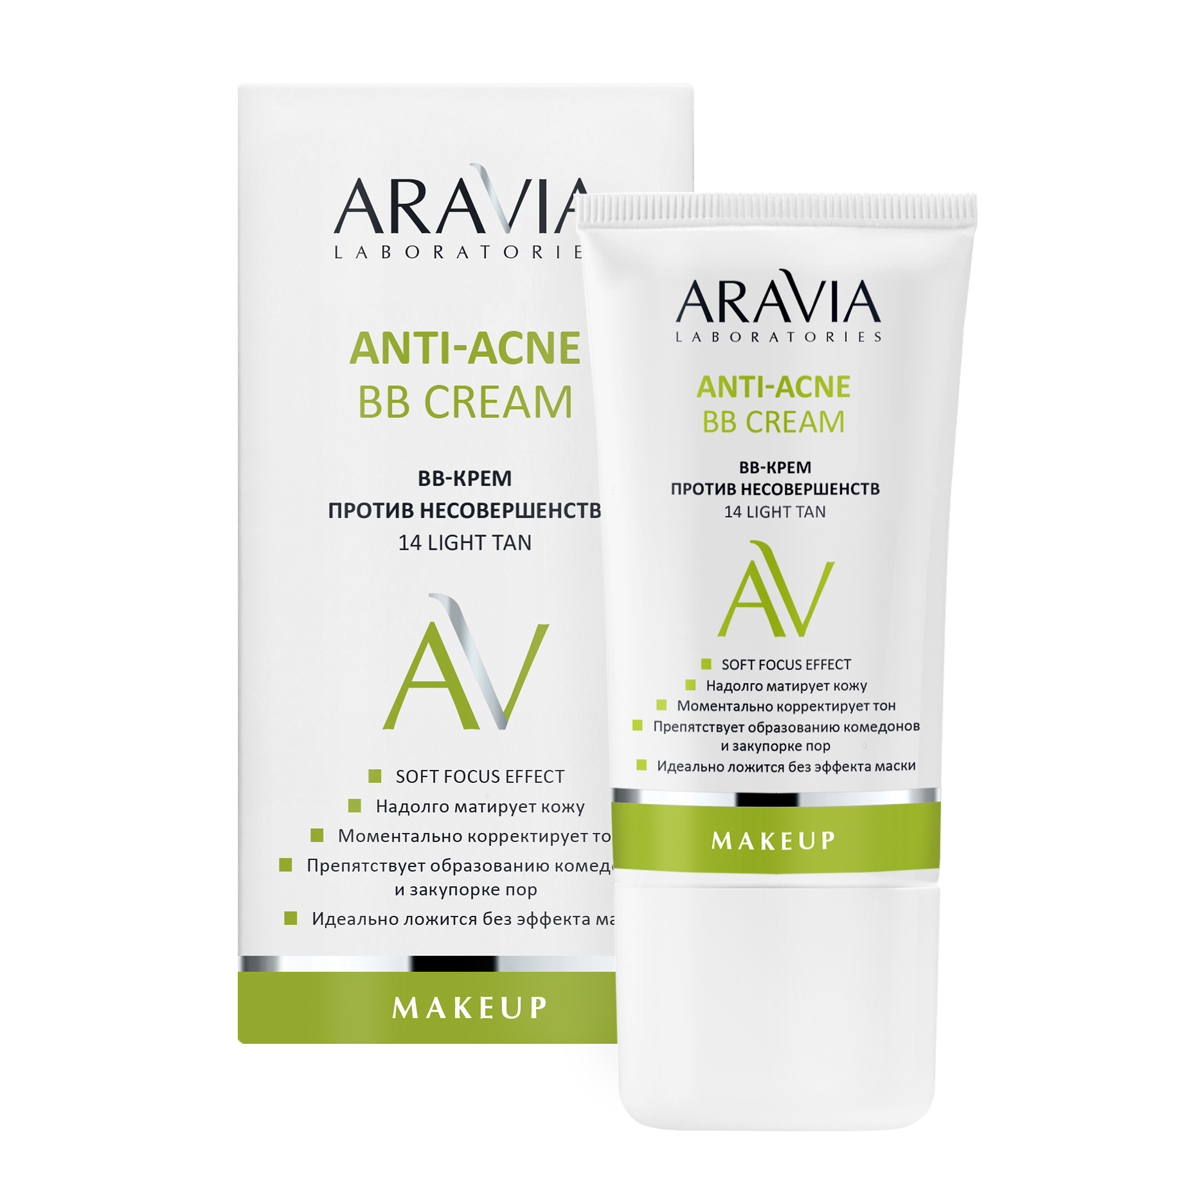 цена Aravia Laboratories BB-крем против несовершенств 14 Light Tan Anti-Acne, 50 мл (Aravia Laboratories, Уход за лицом)